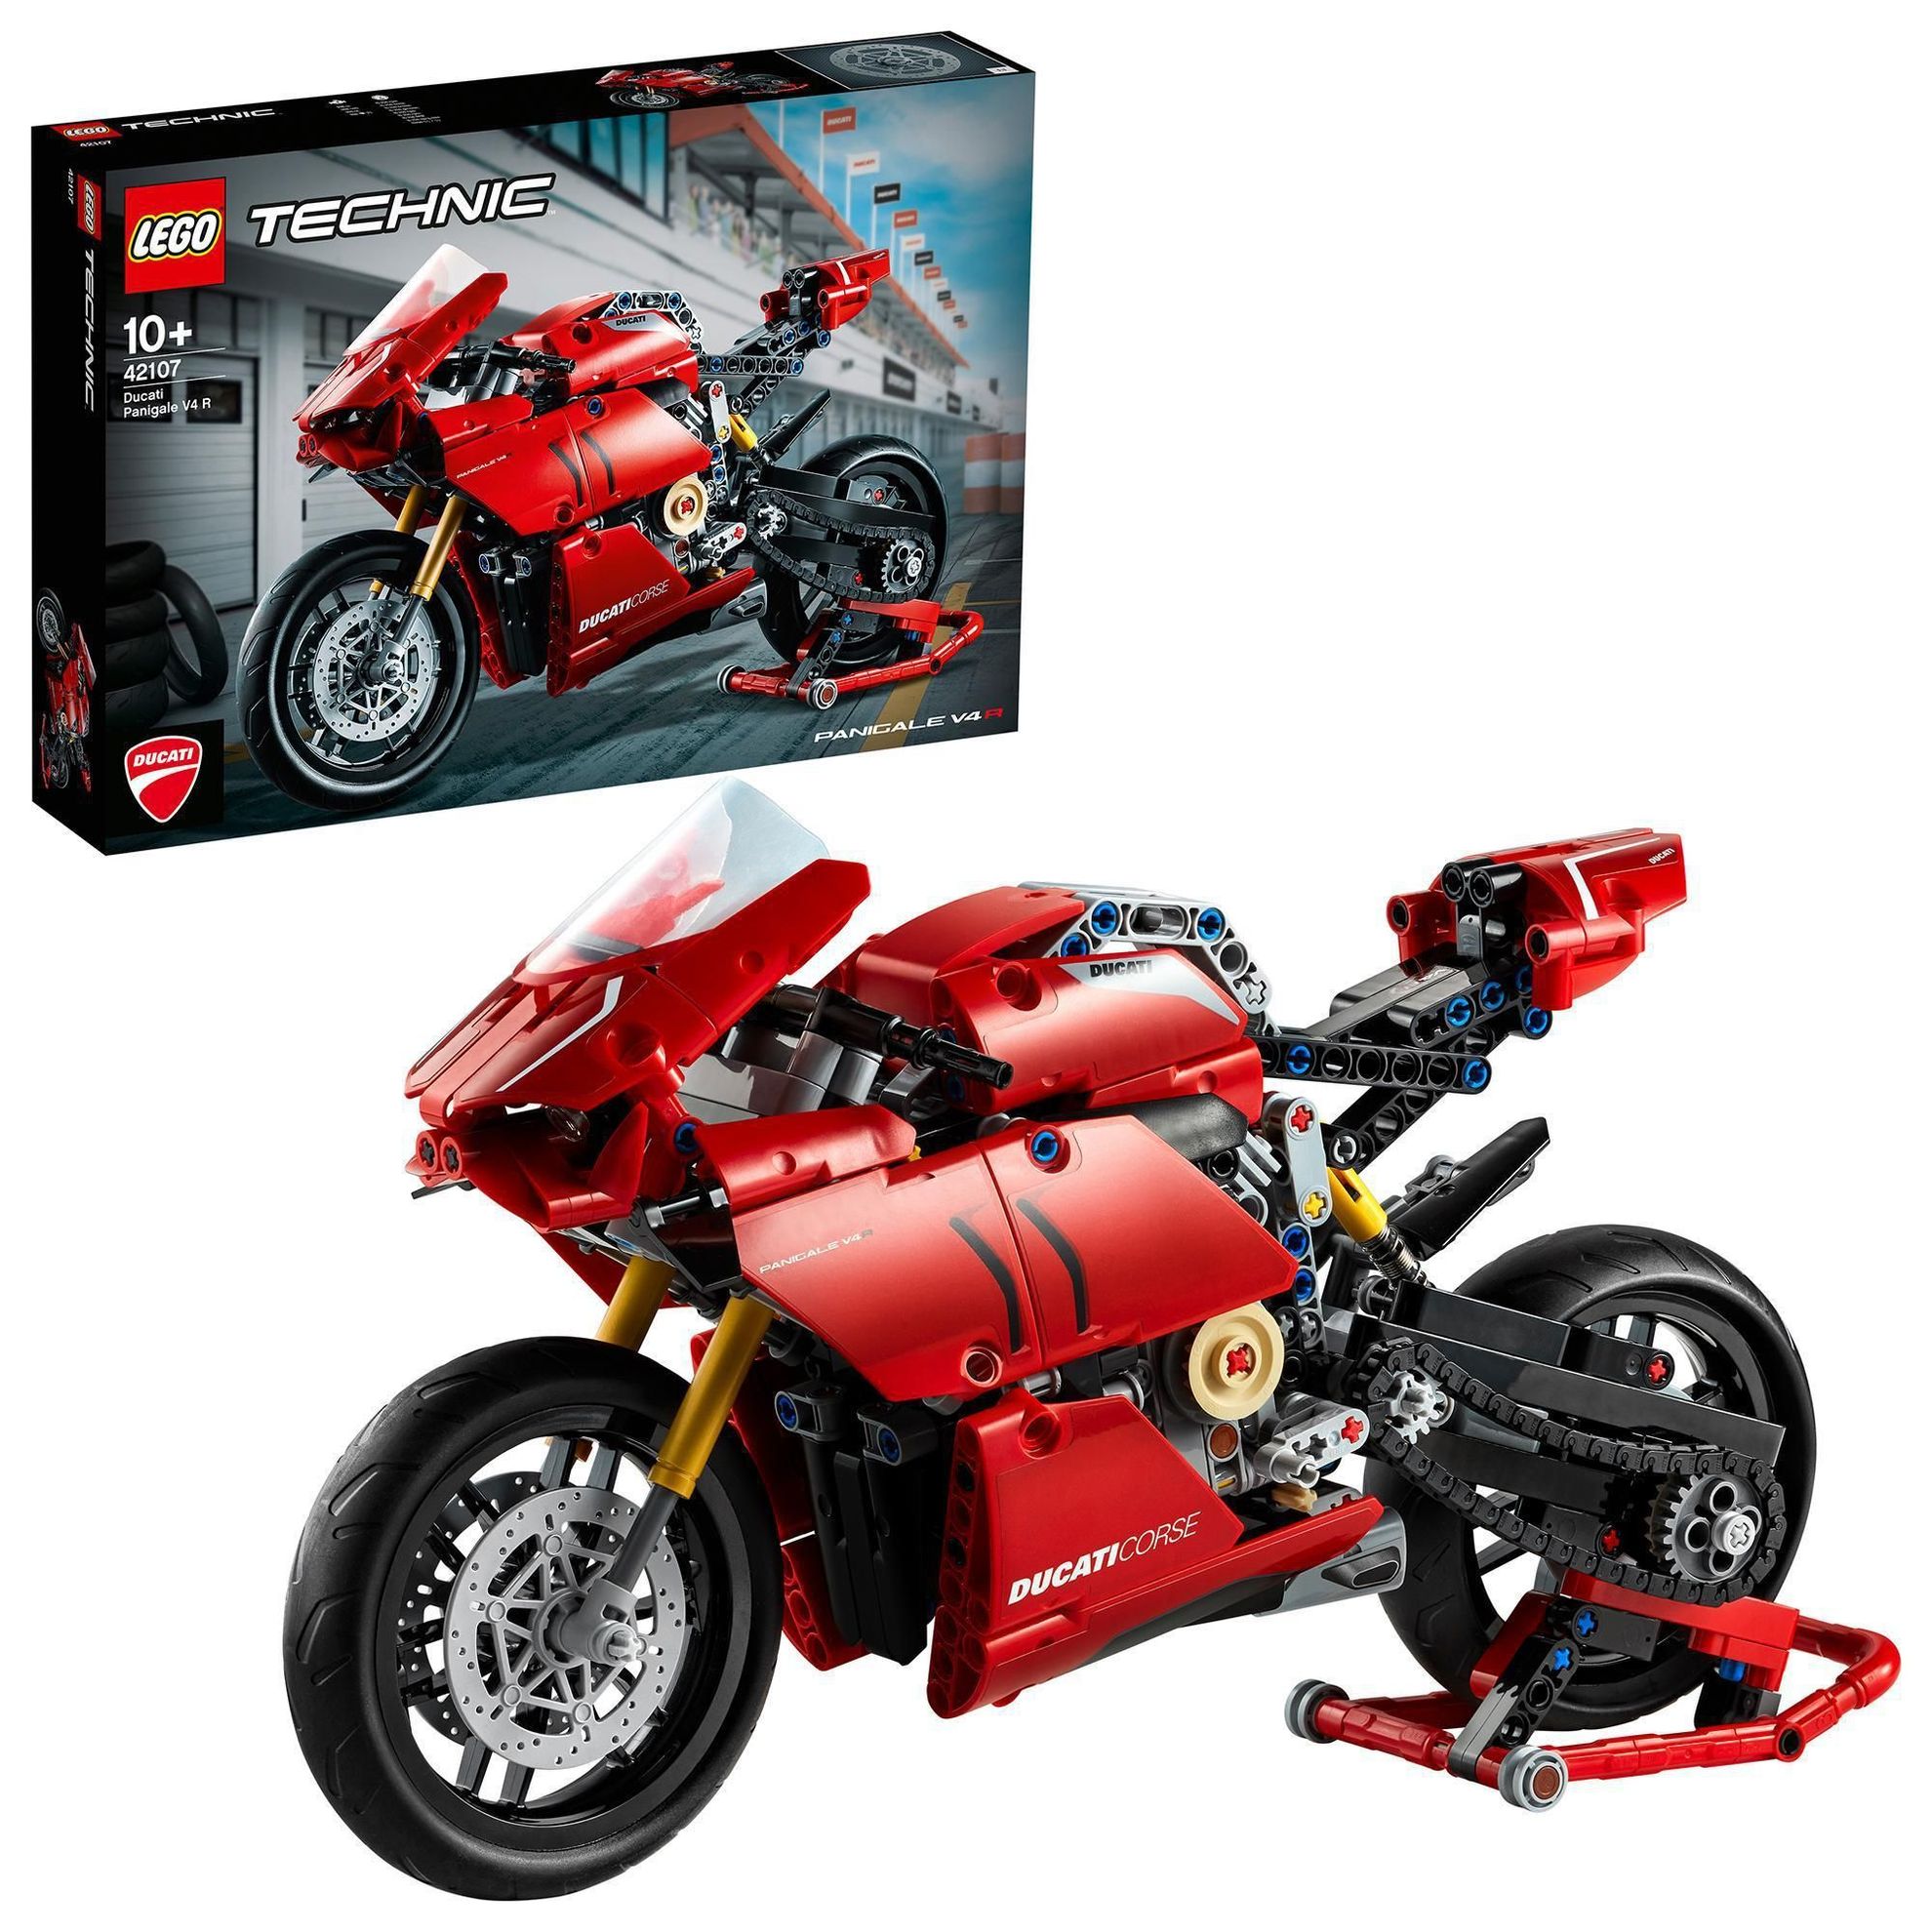 LEGO® Technic 42107 Ducati Panigale V4 R bestellen | Weltbild.ch